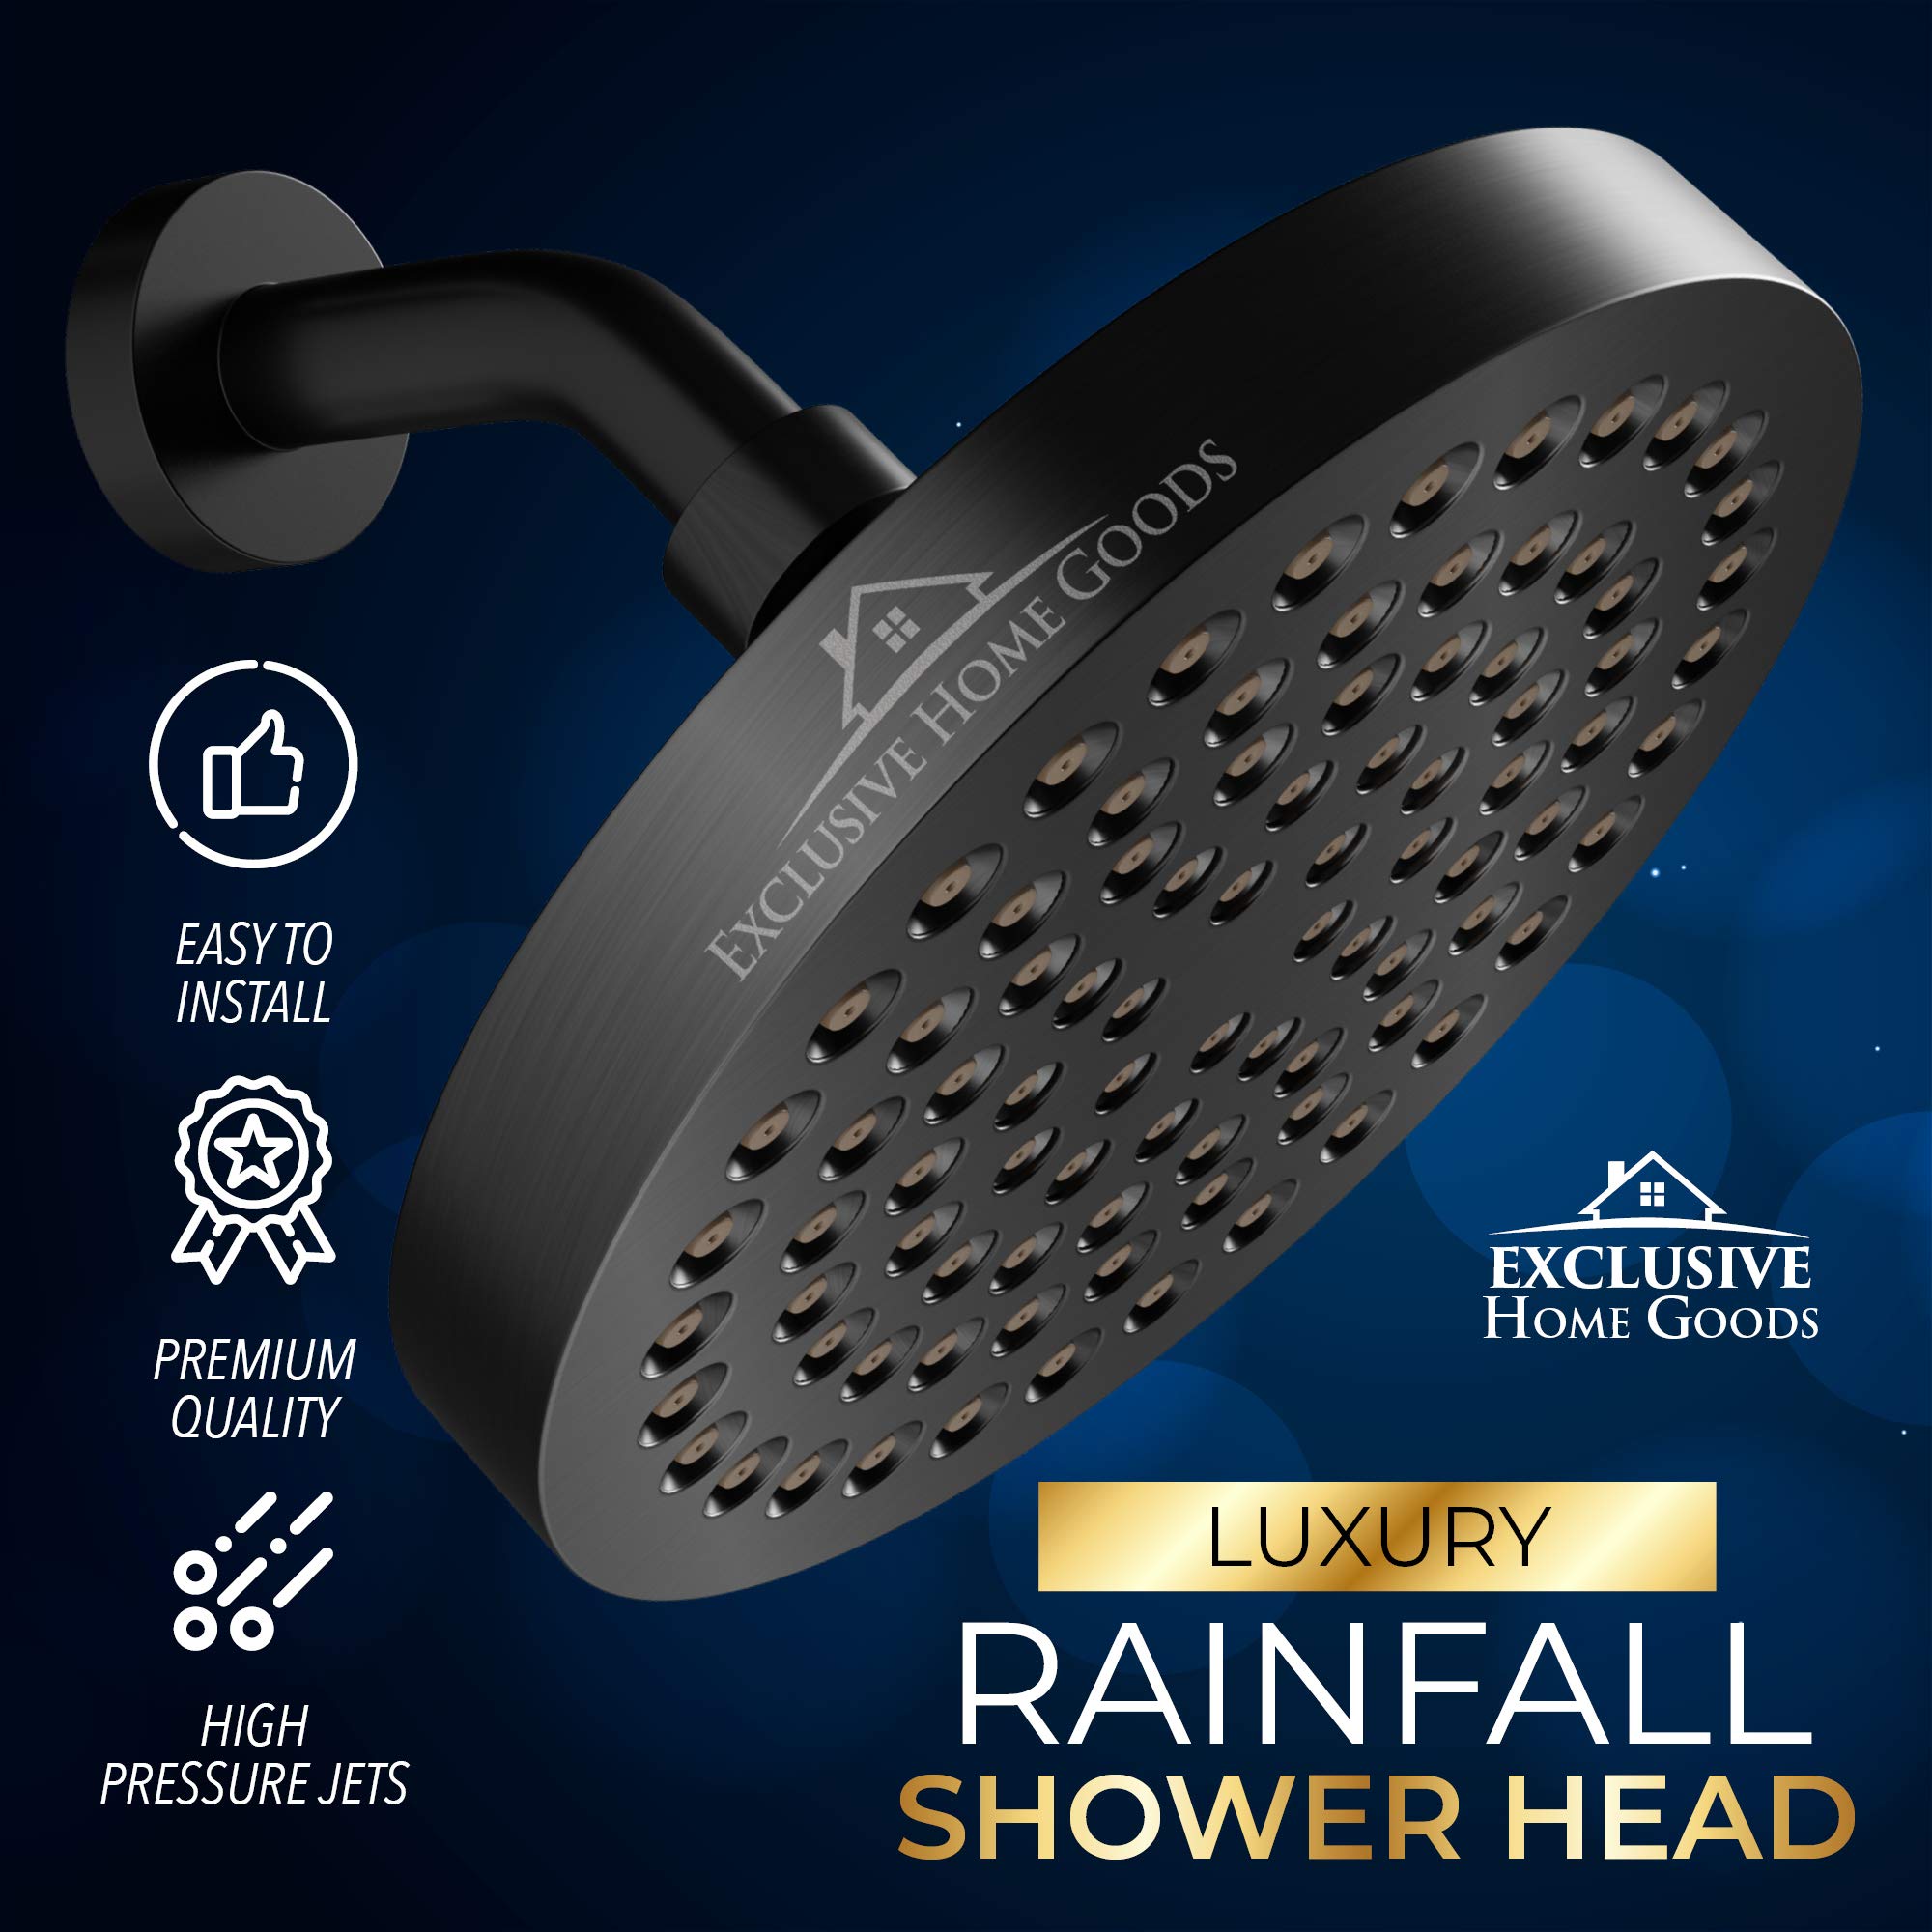 Luxury Rainfall Shower Head - High-Pressure showerhead Jets, rain shower head Ant-Clog Silicone Nozzles (1.8 GPM, Matte Black)  - Like New